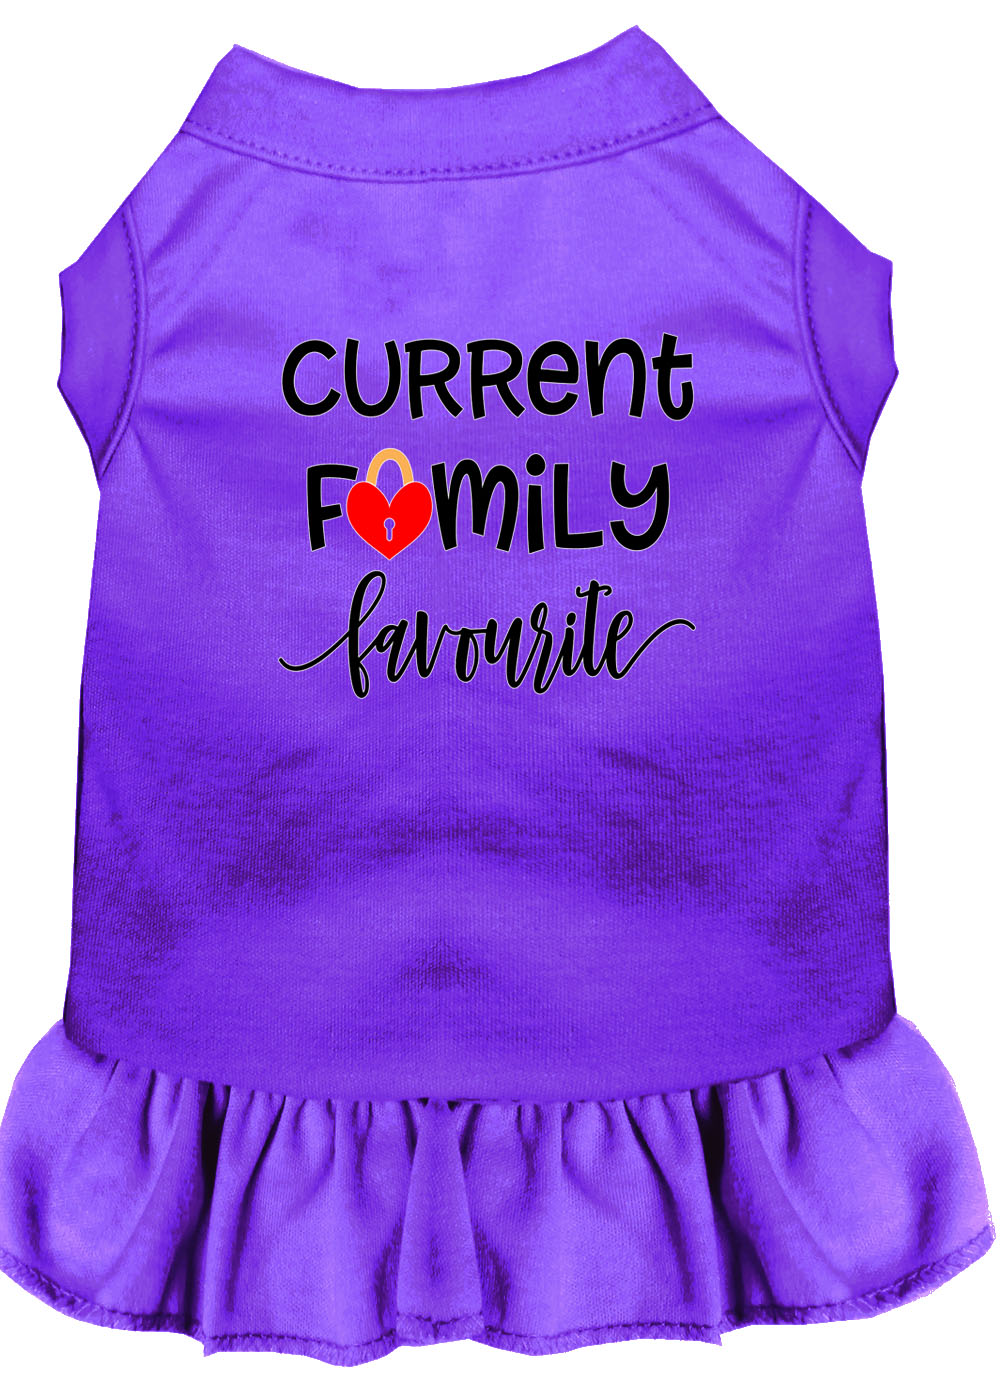 Family Favorite Screen Print Dog Dress Purple XS